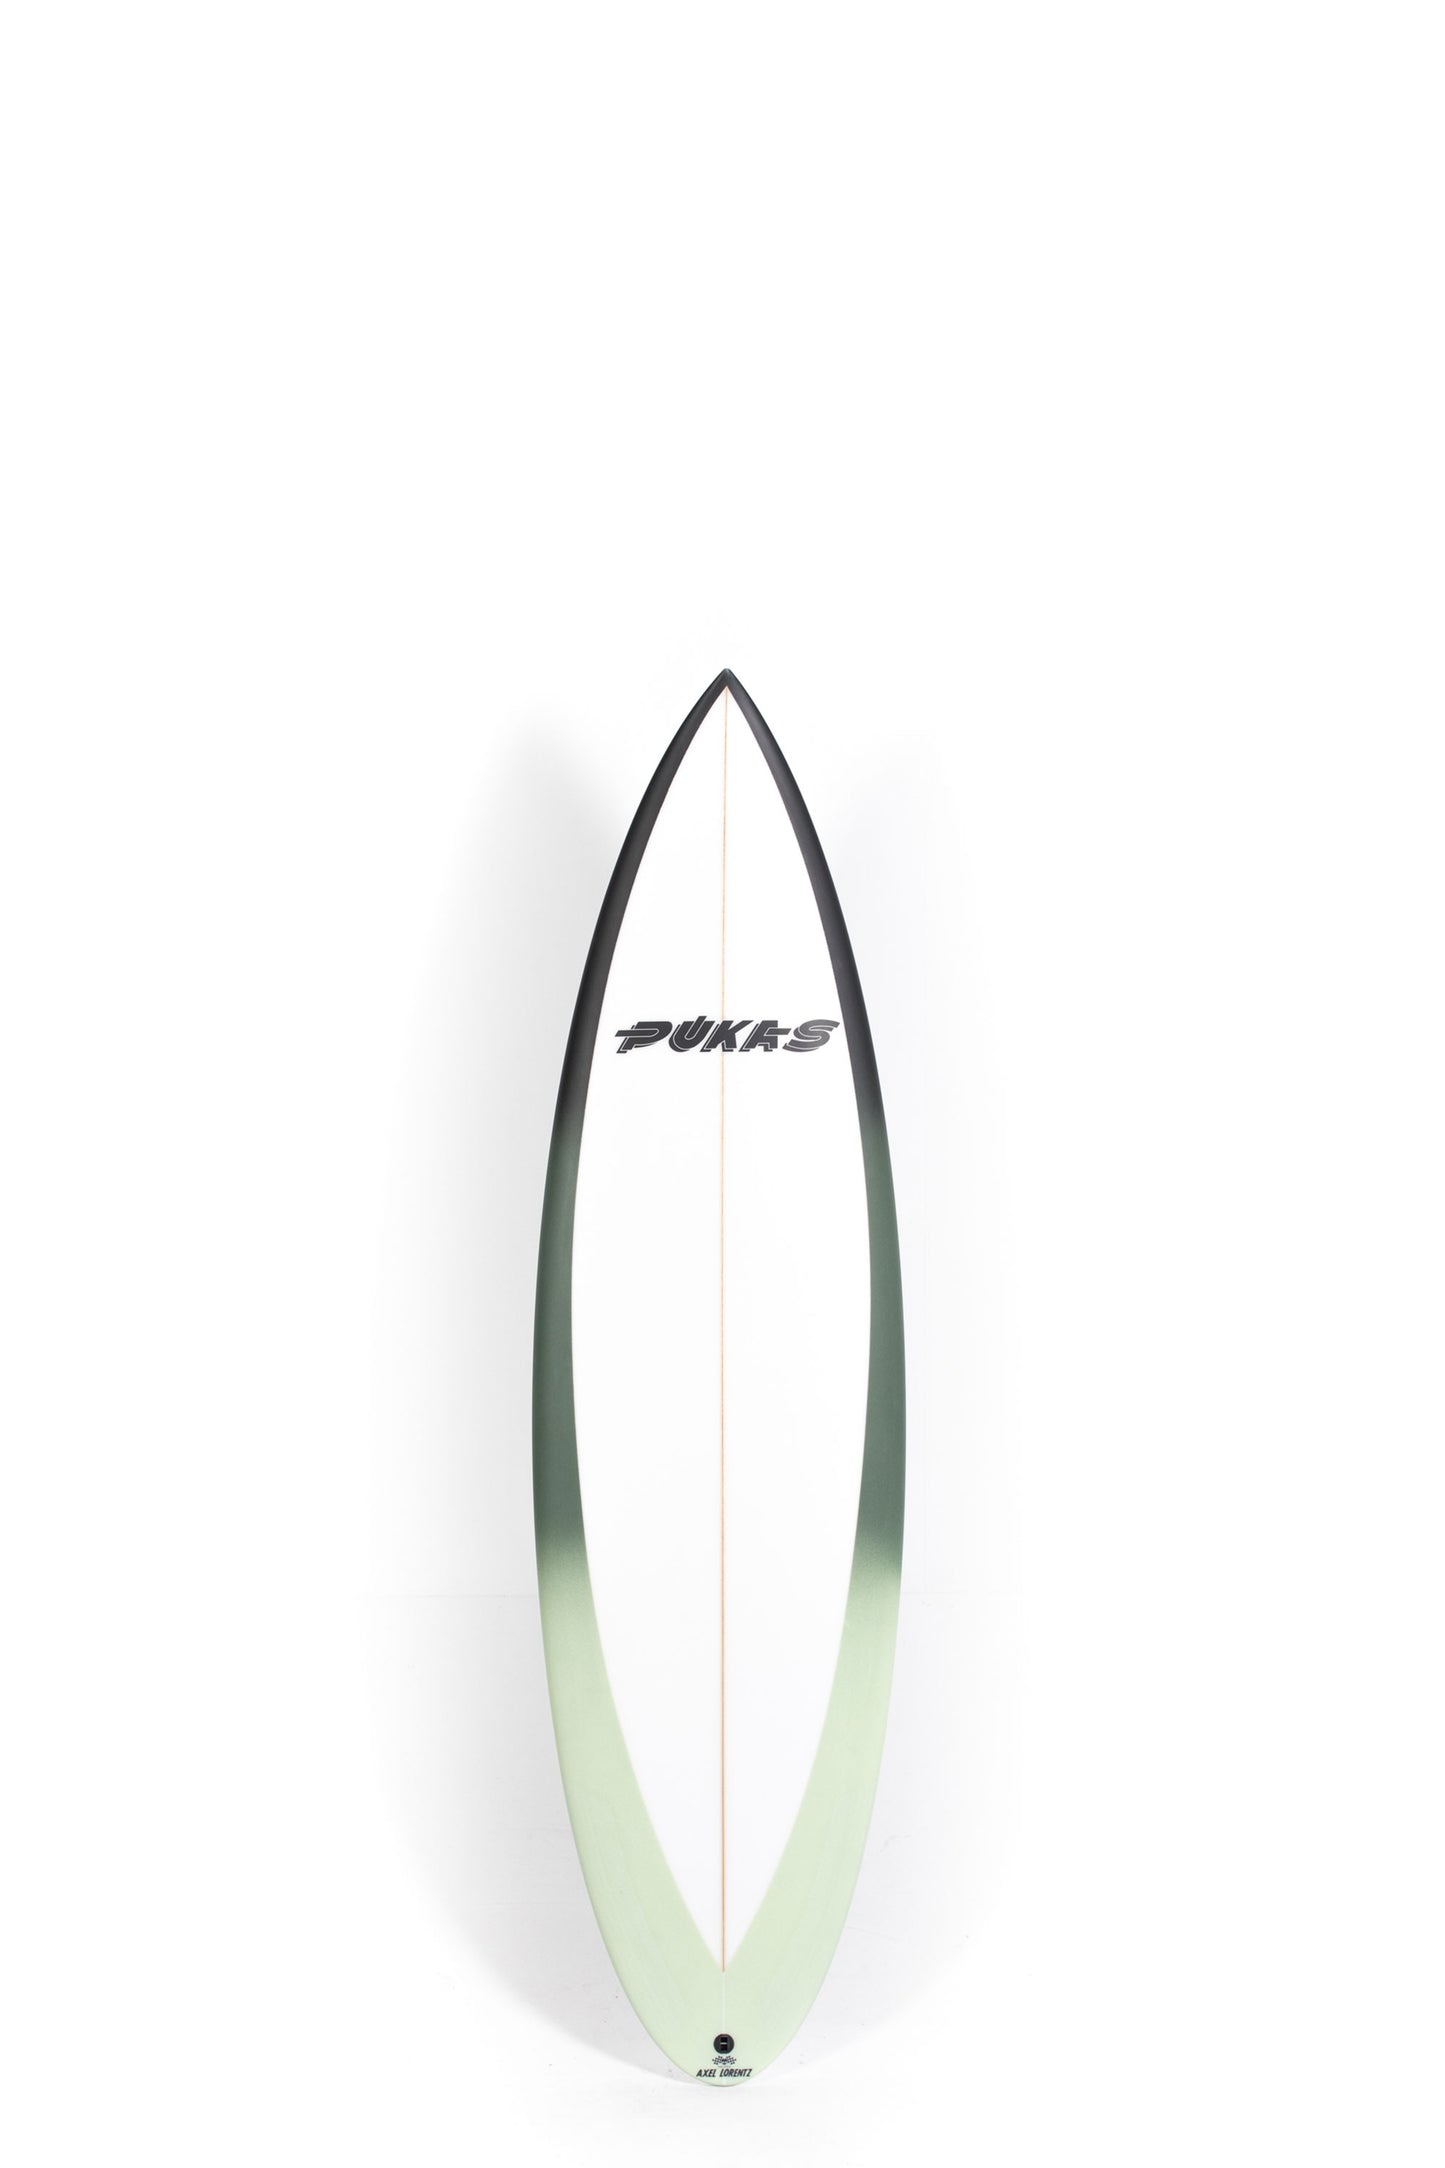 Pukas Surf Shop - Pukas Surfboard - TASTY TREAT ALL ROUND by Axel Lorentz - 6'2" x 19.88 x 2.65 x 34.6L - AX09175